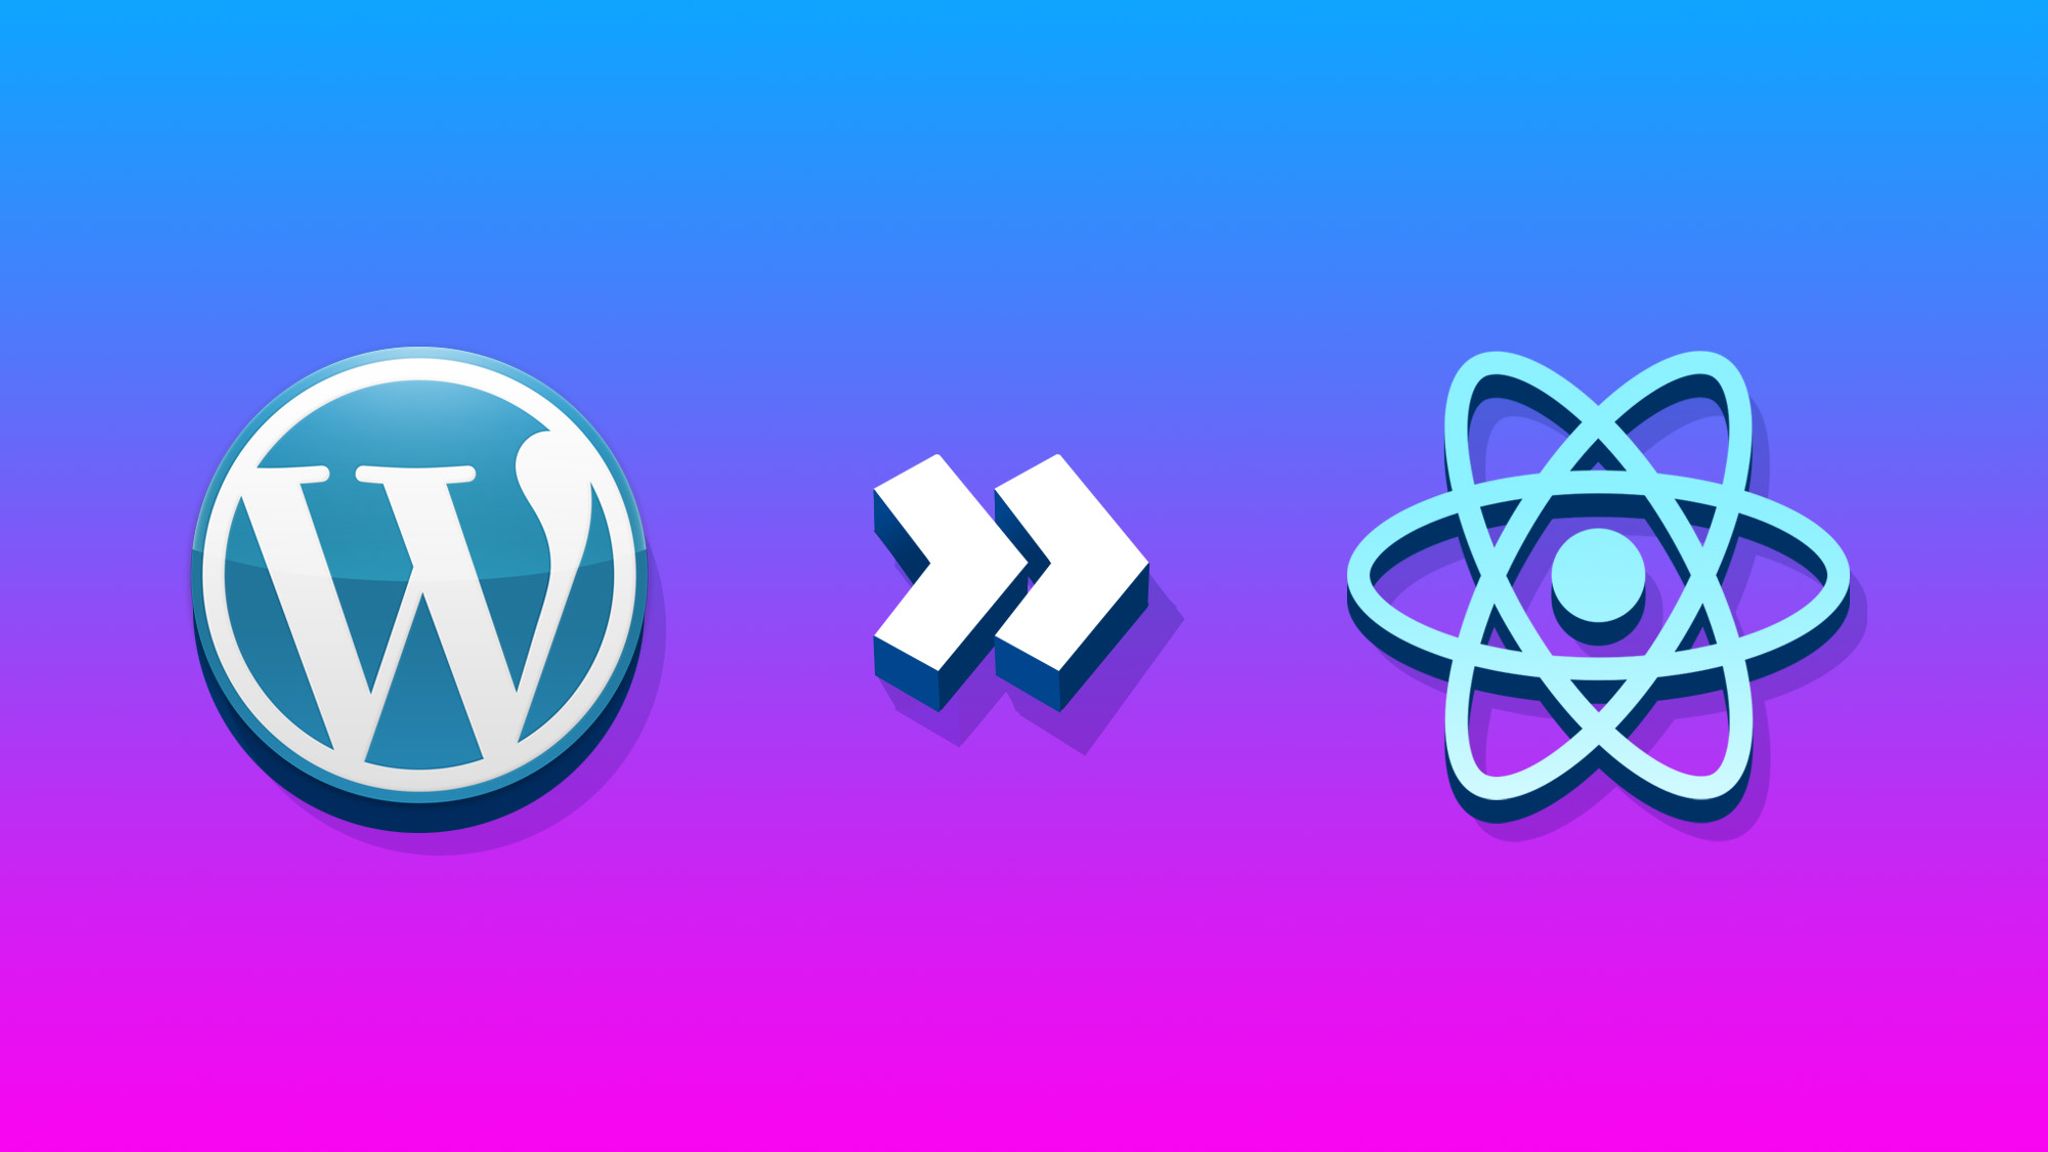 WordPress, Frontity, and React logo icons